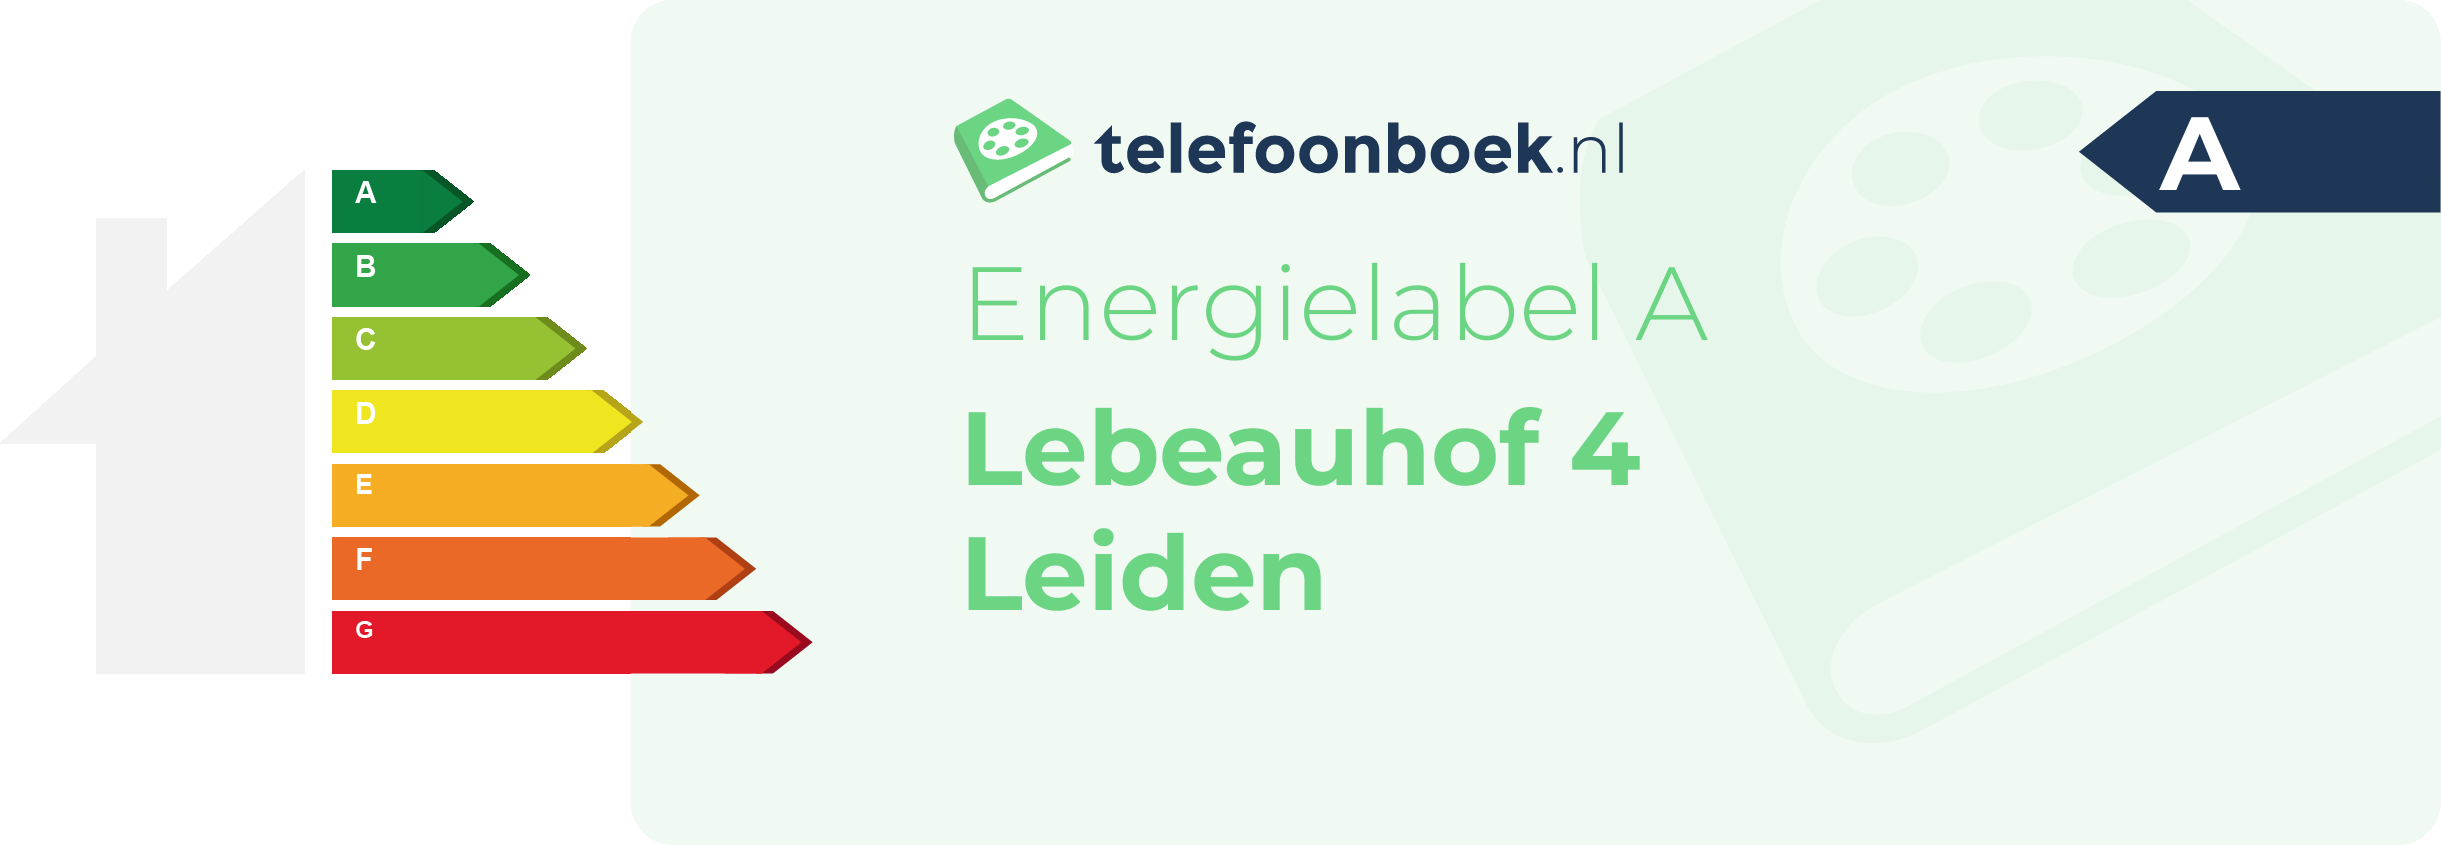 Energielabel Lebeauhof 4 Leiden